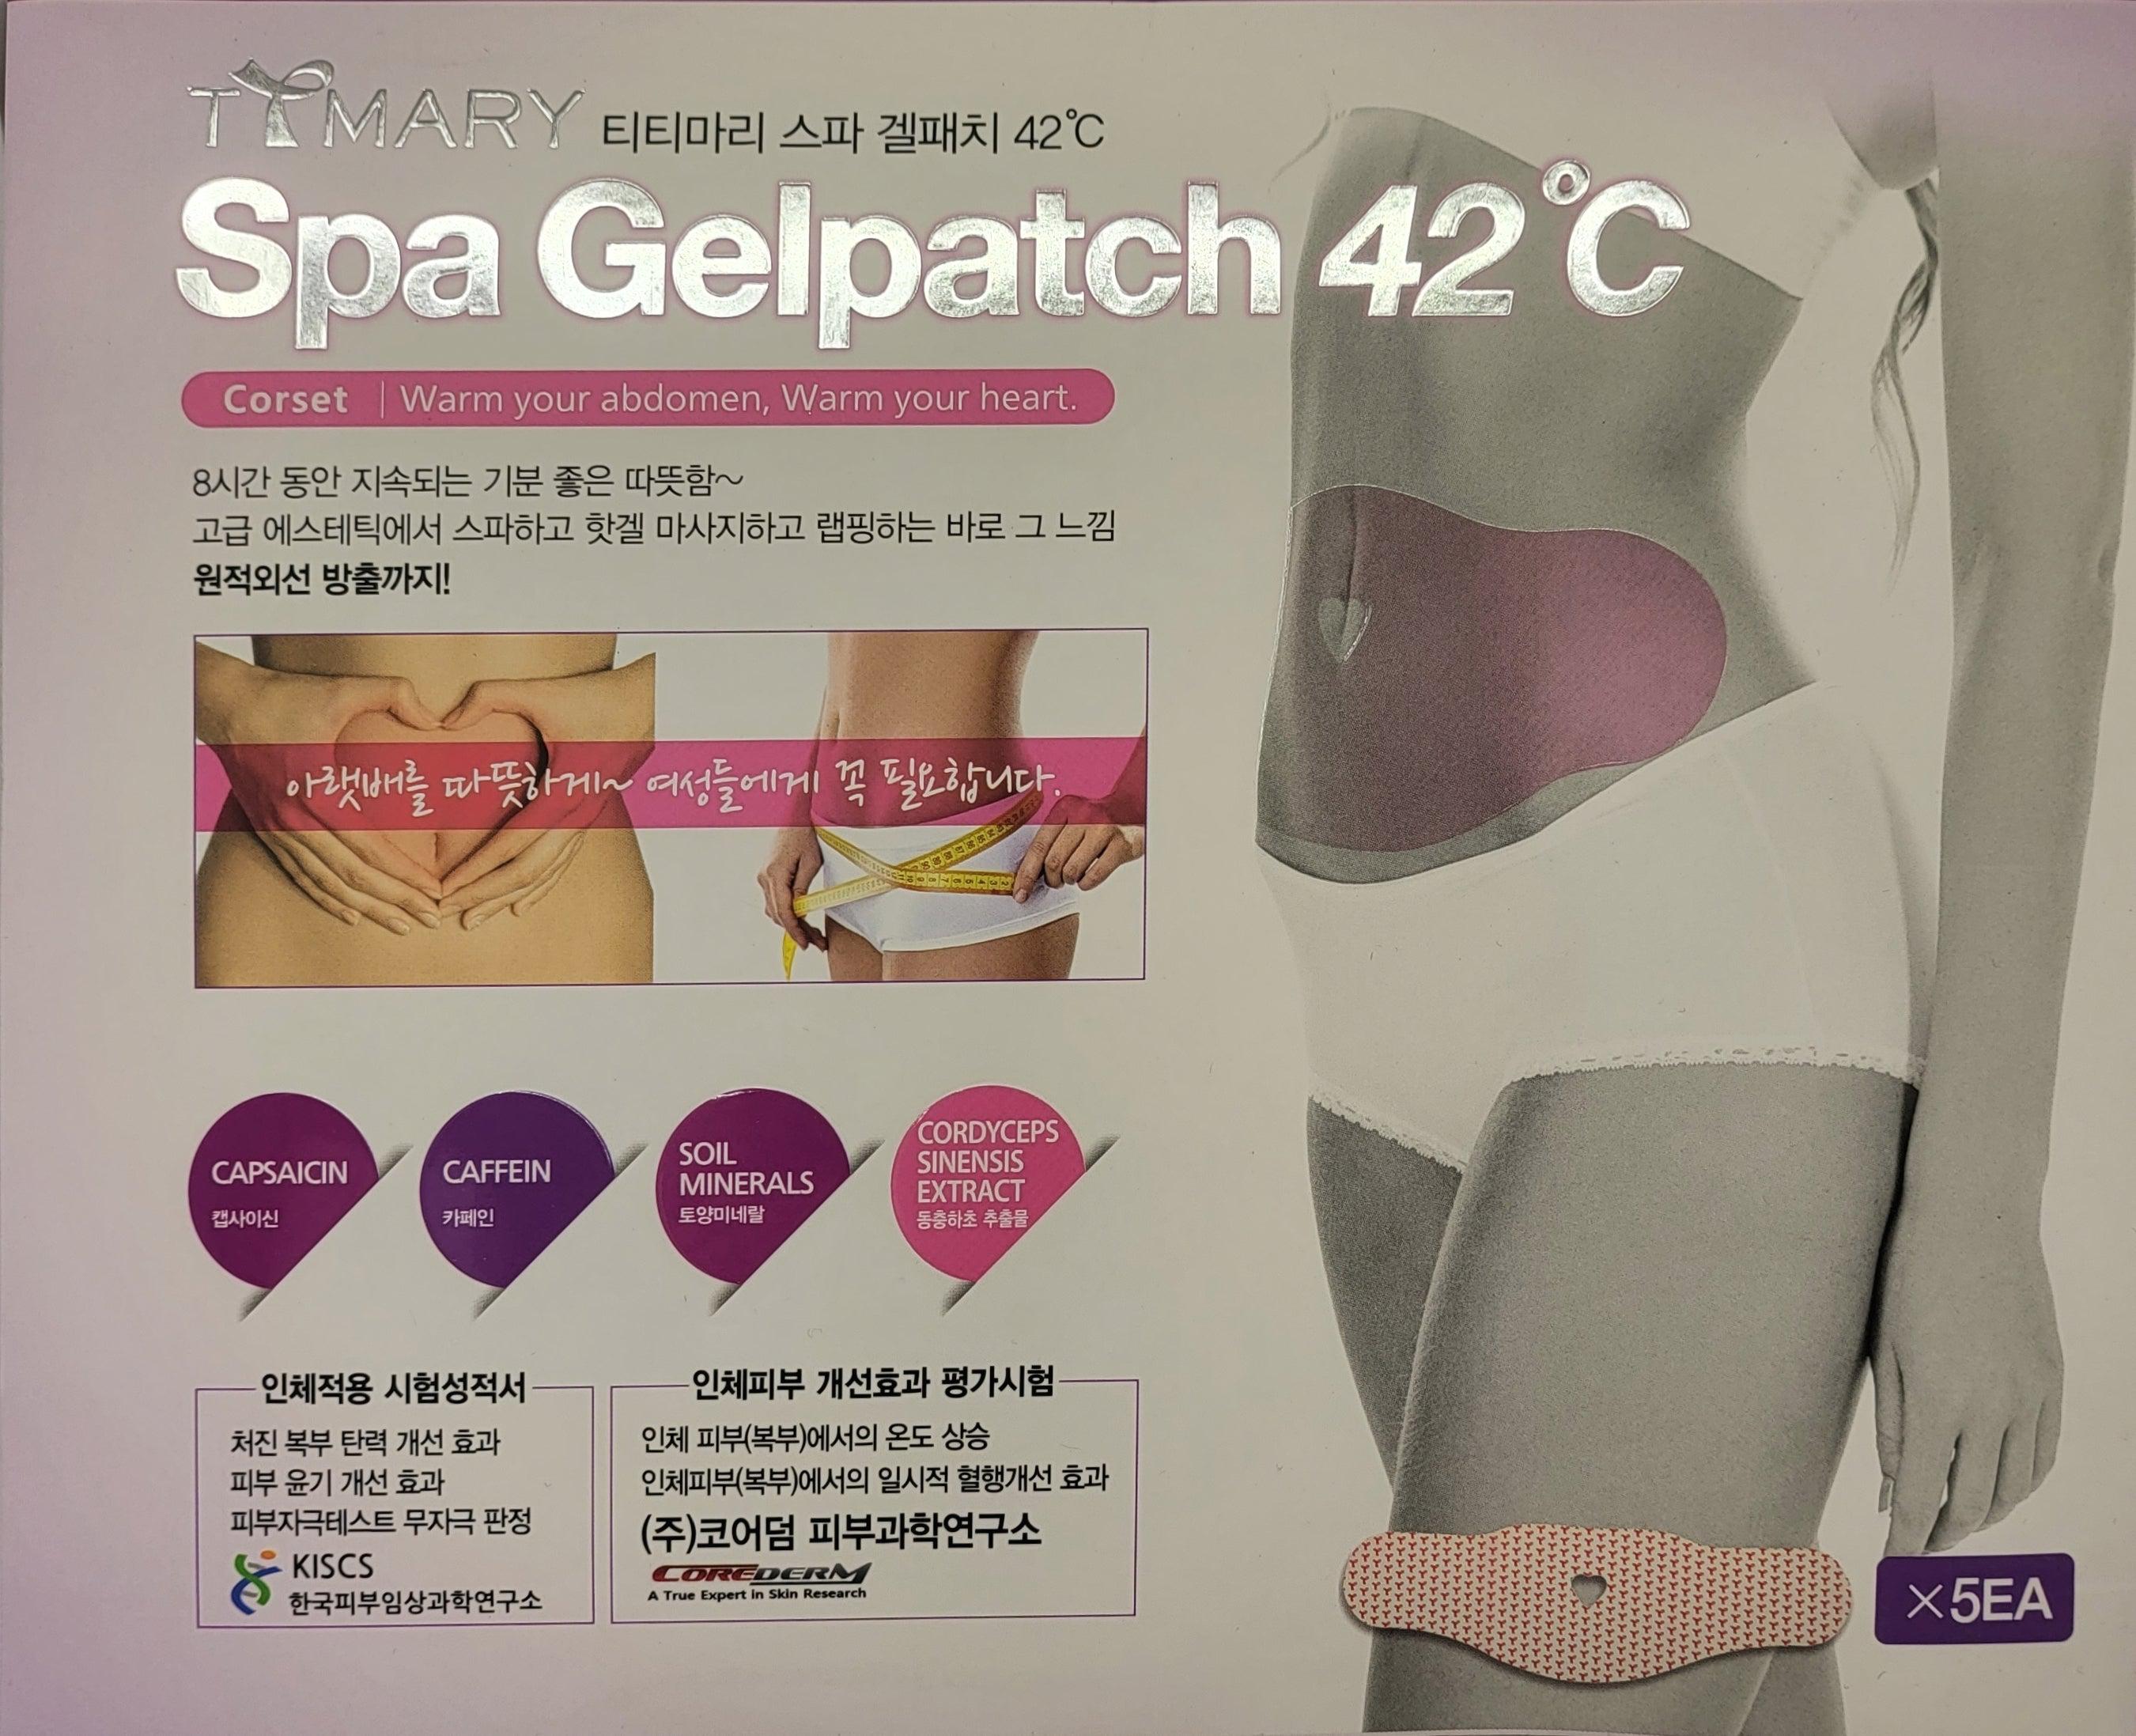 TTMARY Spa Gelpatch 42˚C Corset  - Warm your abdomen - Warm your heart